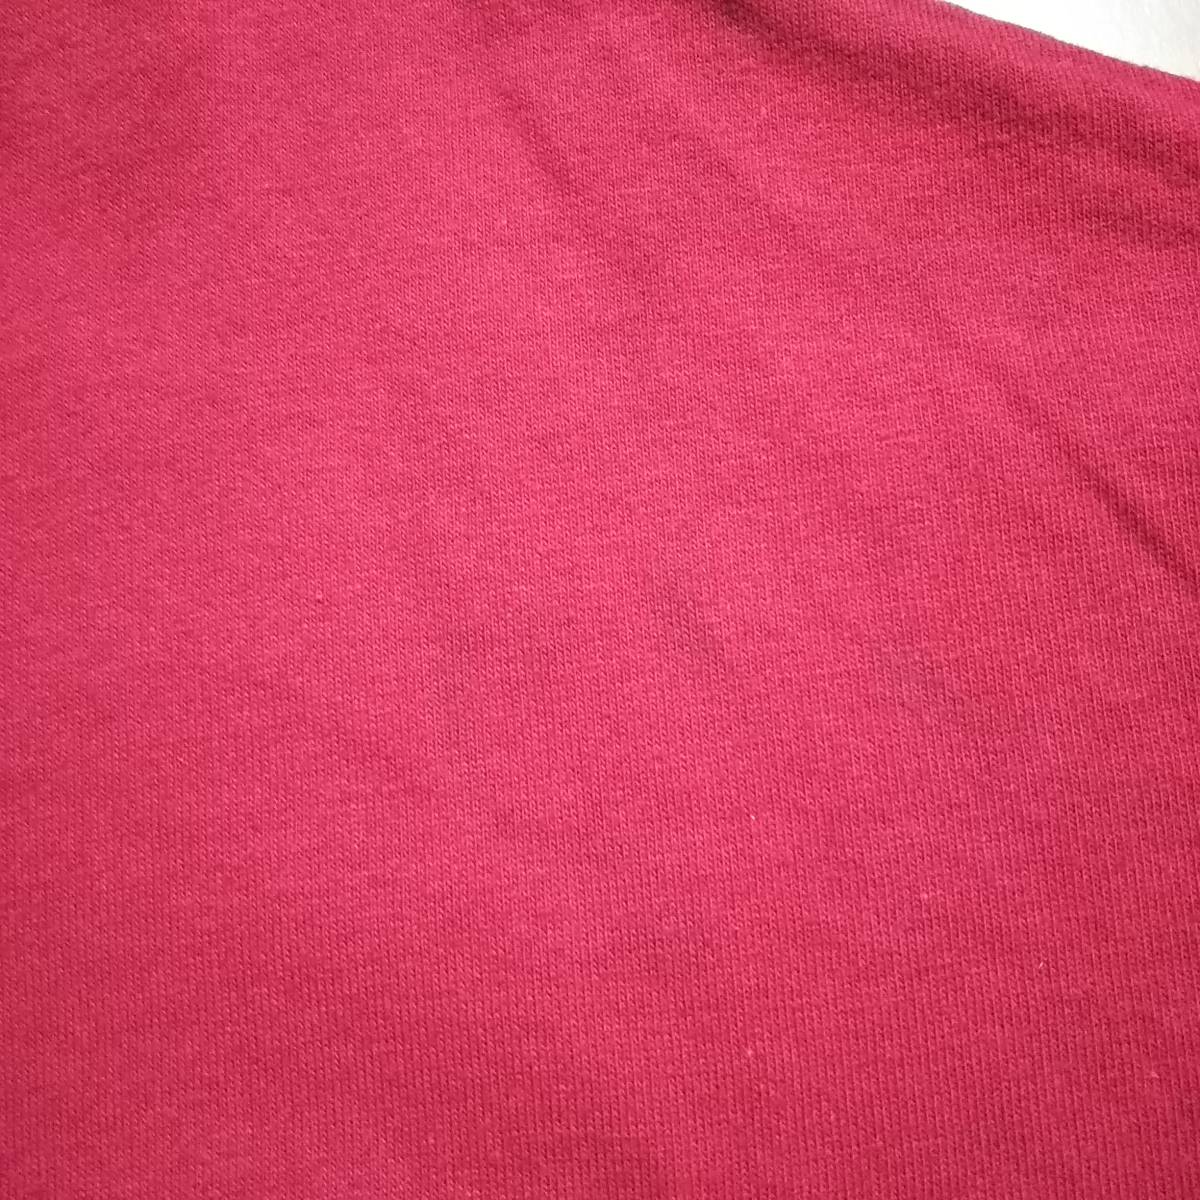 *[repipiarmario]repi Piaa ru Mario red back Cross T-shirt L 160cm*